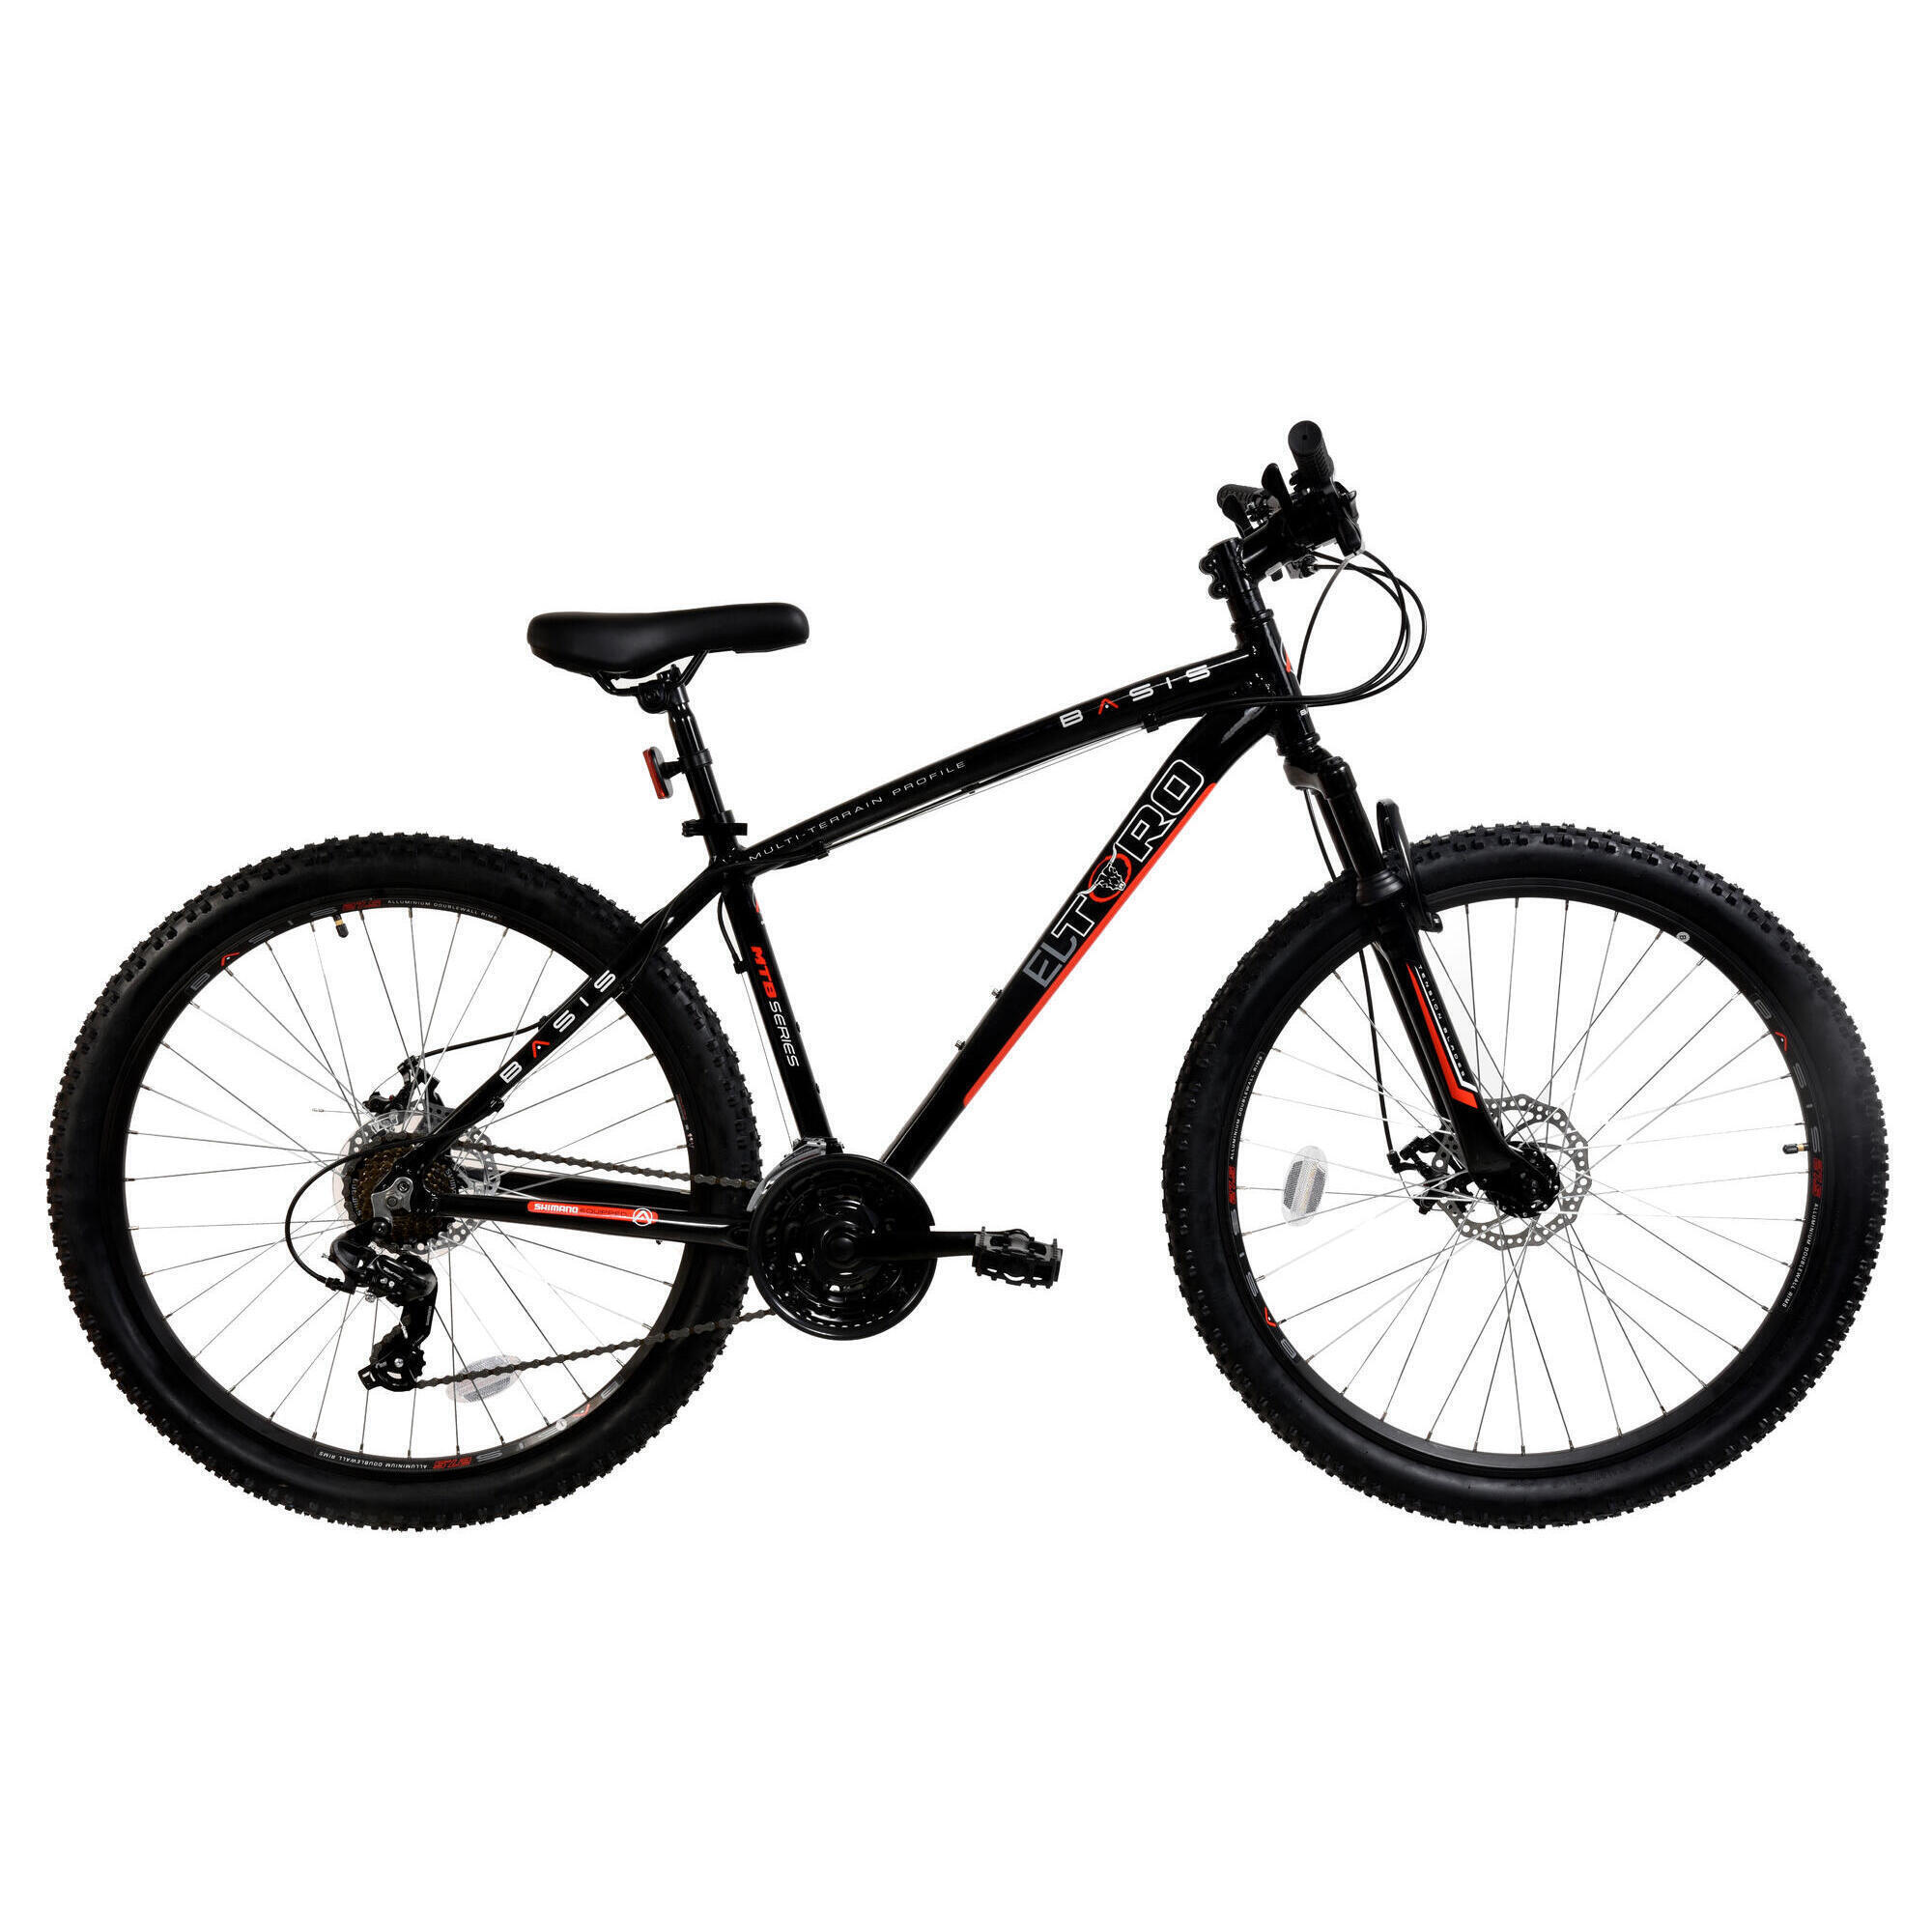 Basis El Toro Men's Hardtail Mountain Bike, 27.5In Wheel - Black/Red 1/5